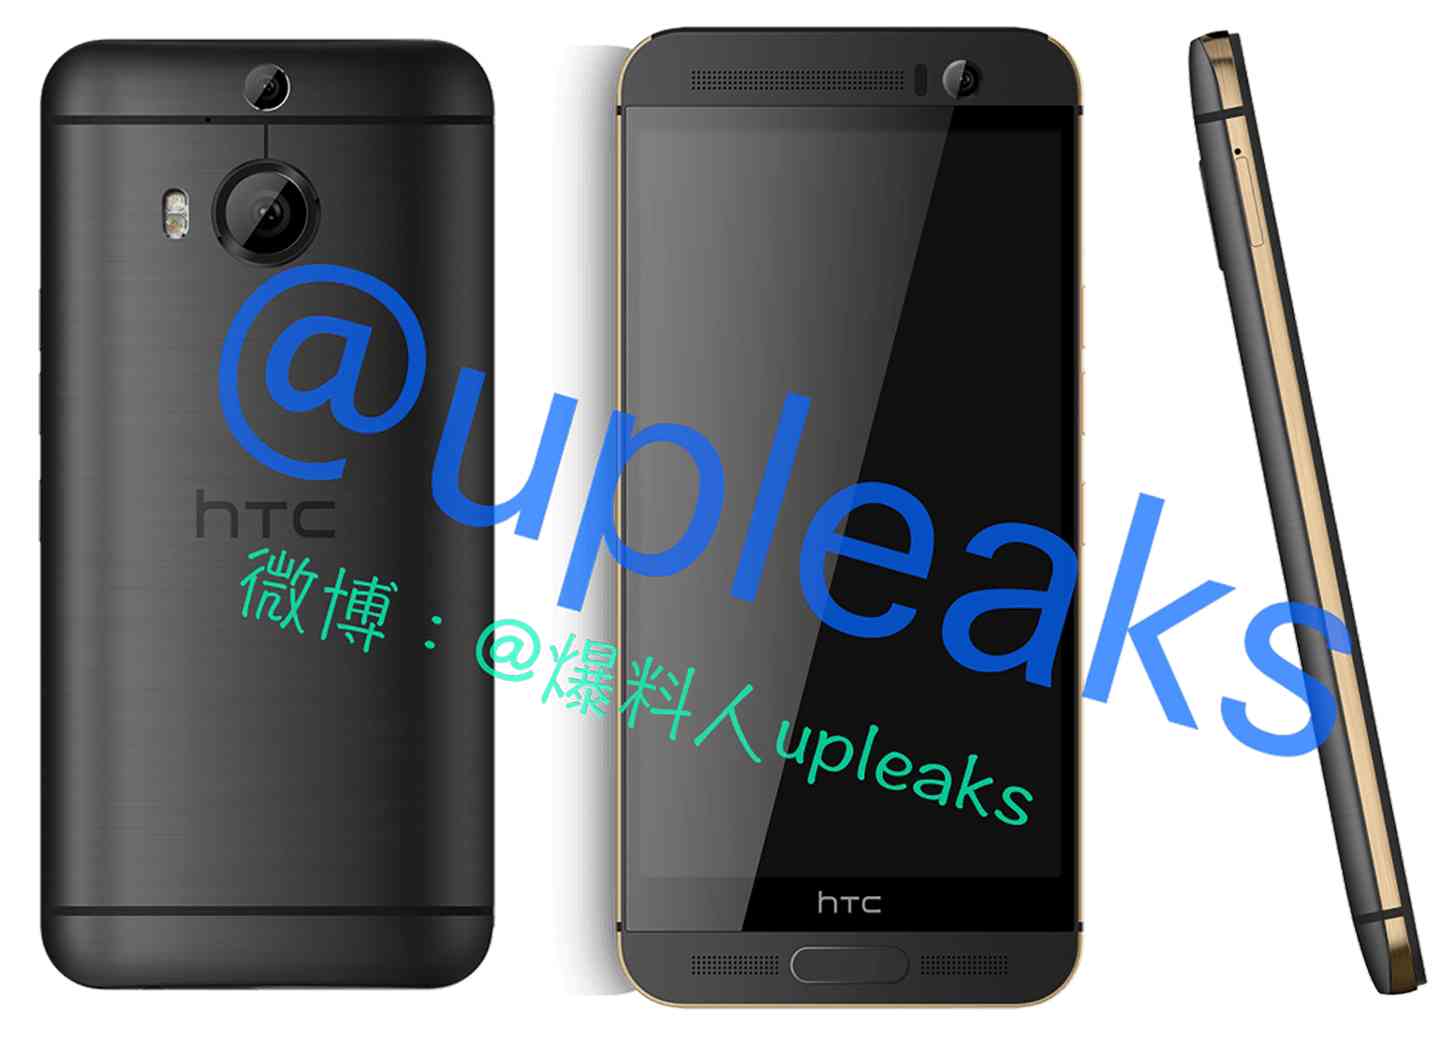 HTC One M9+ press image leak